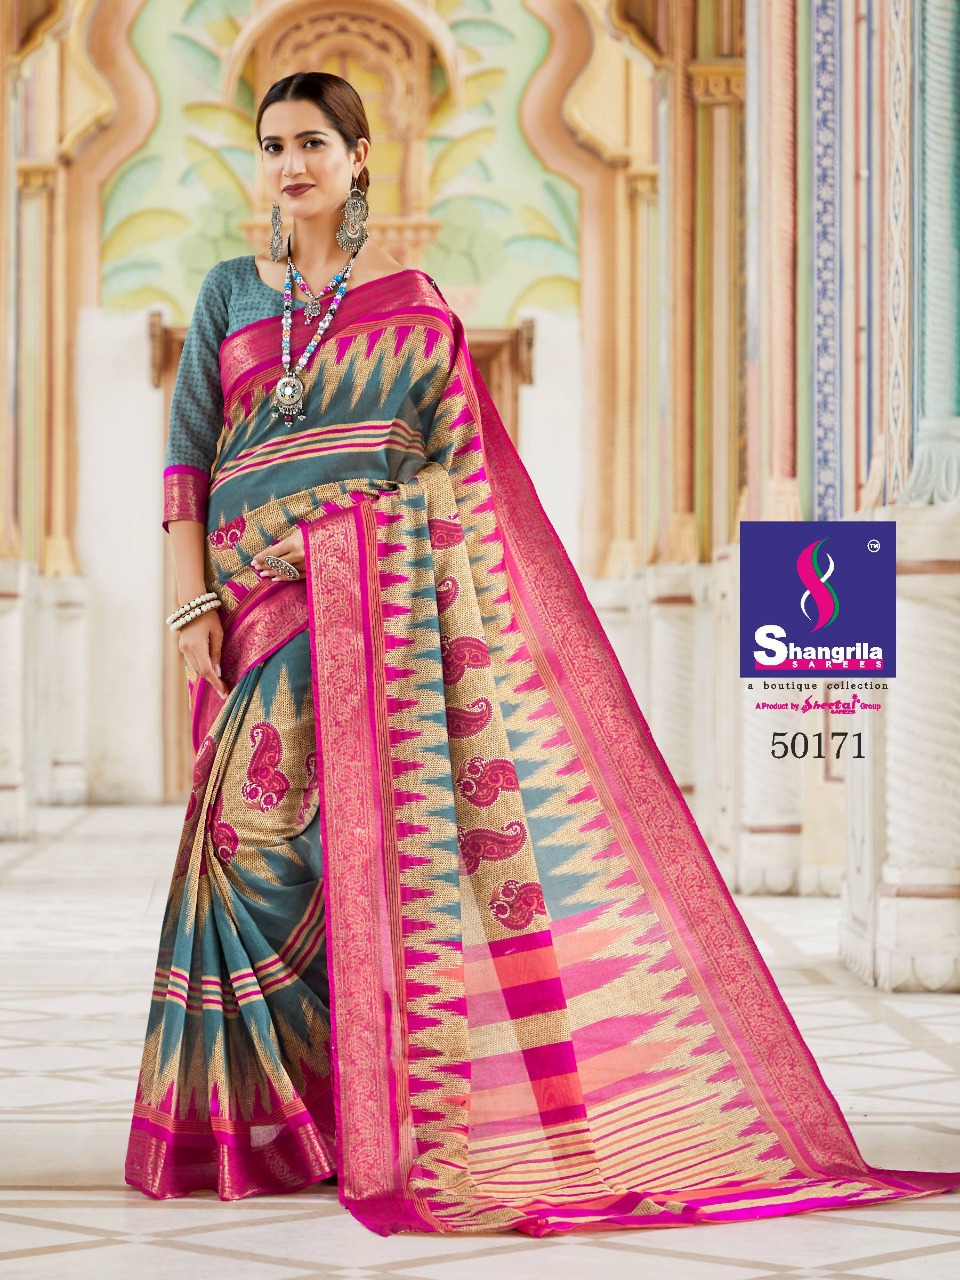 Shangrila kanjivaram silk vol 13 exclusive collection of sarres